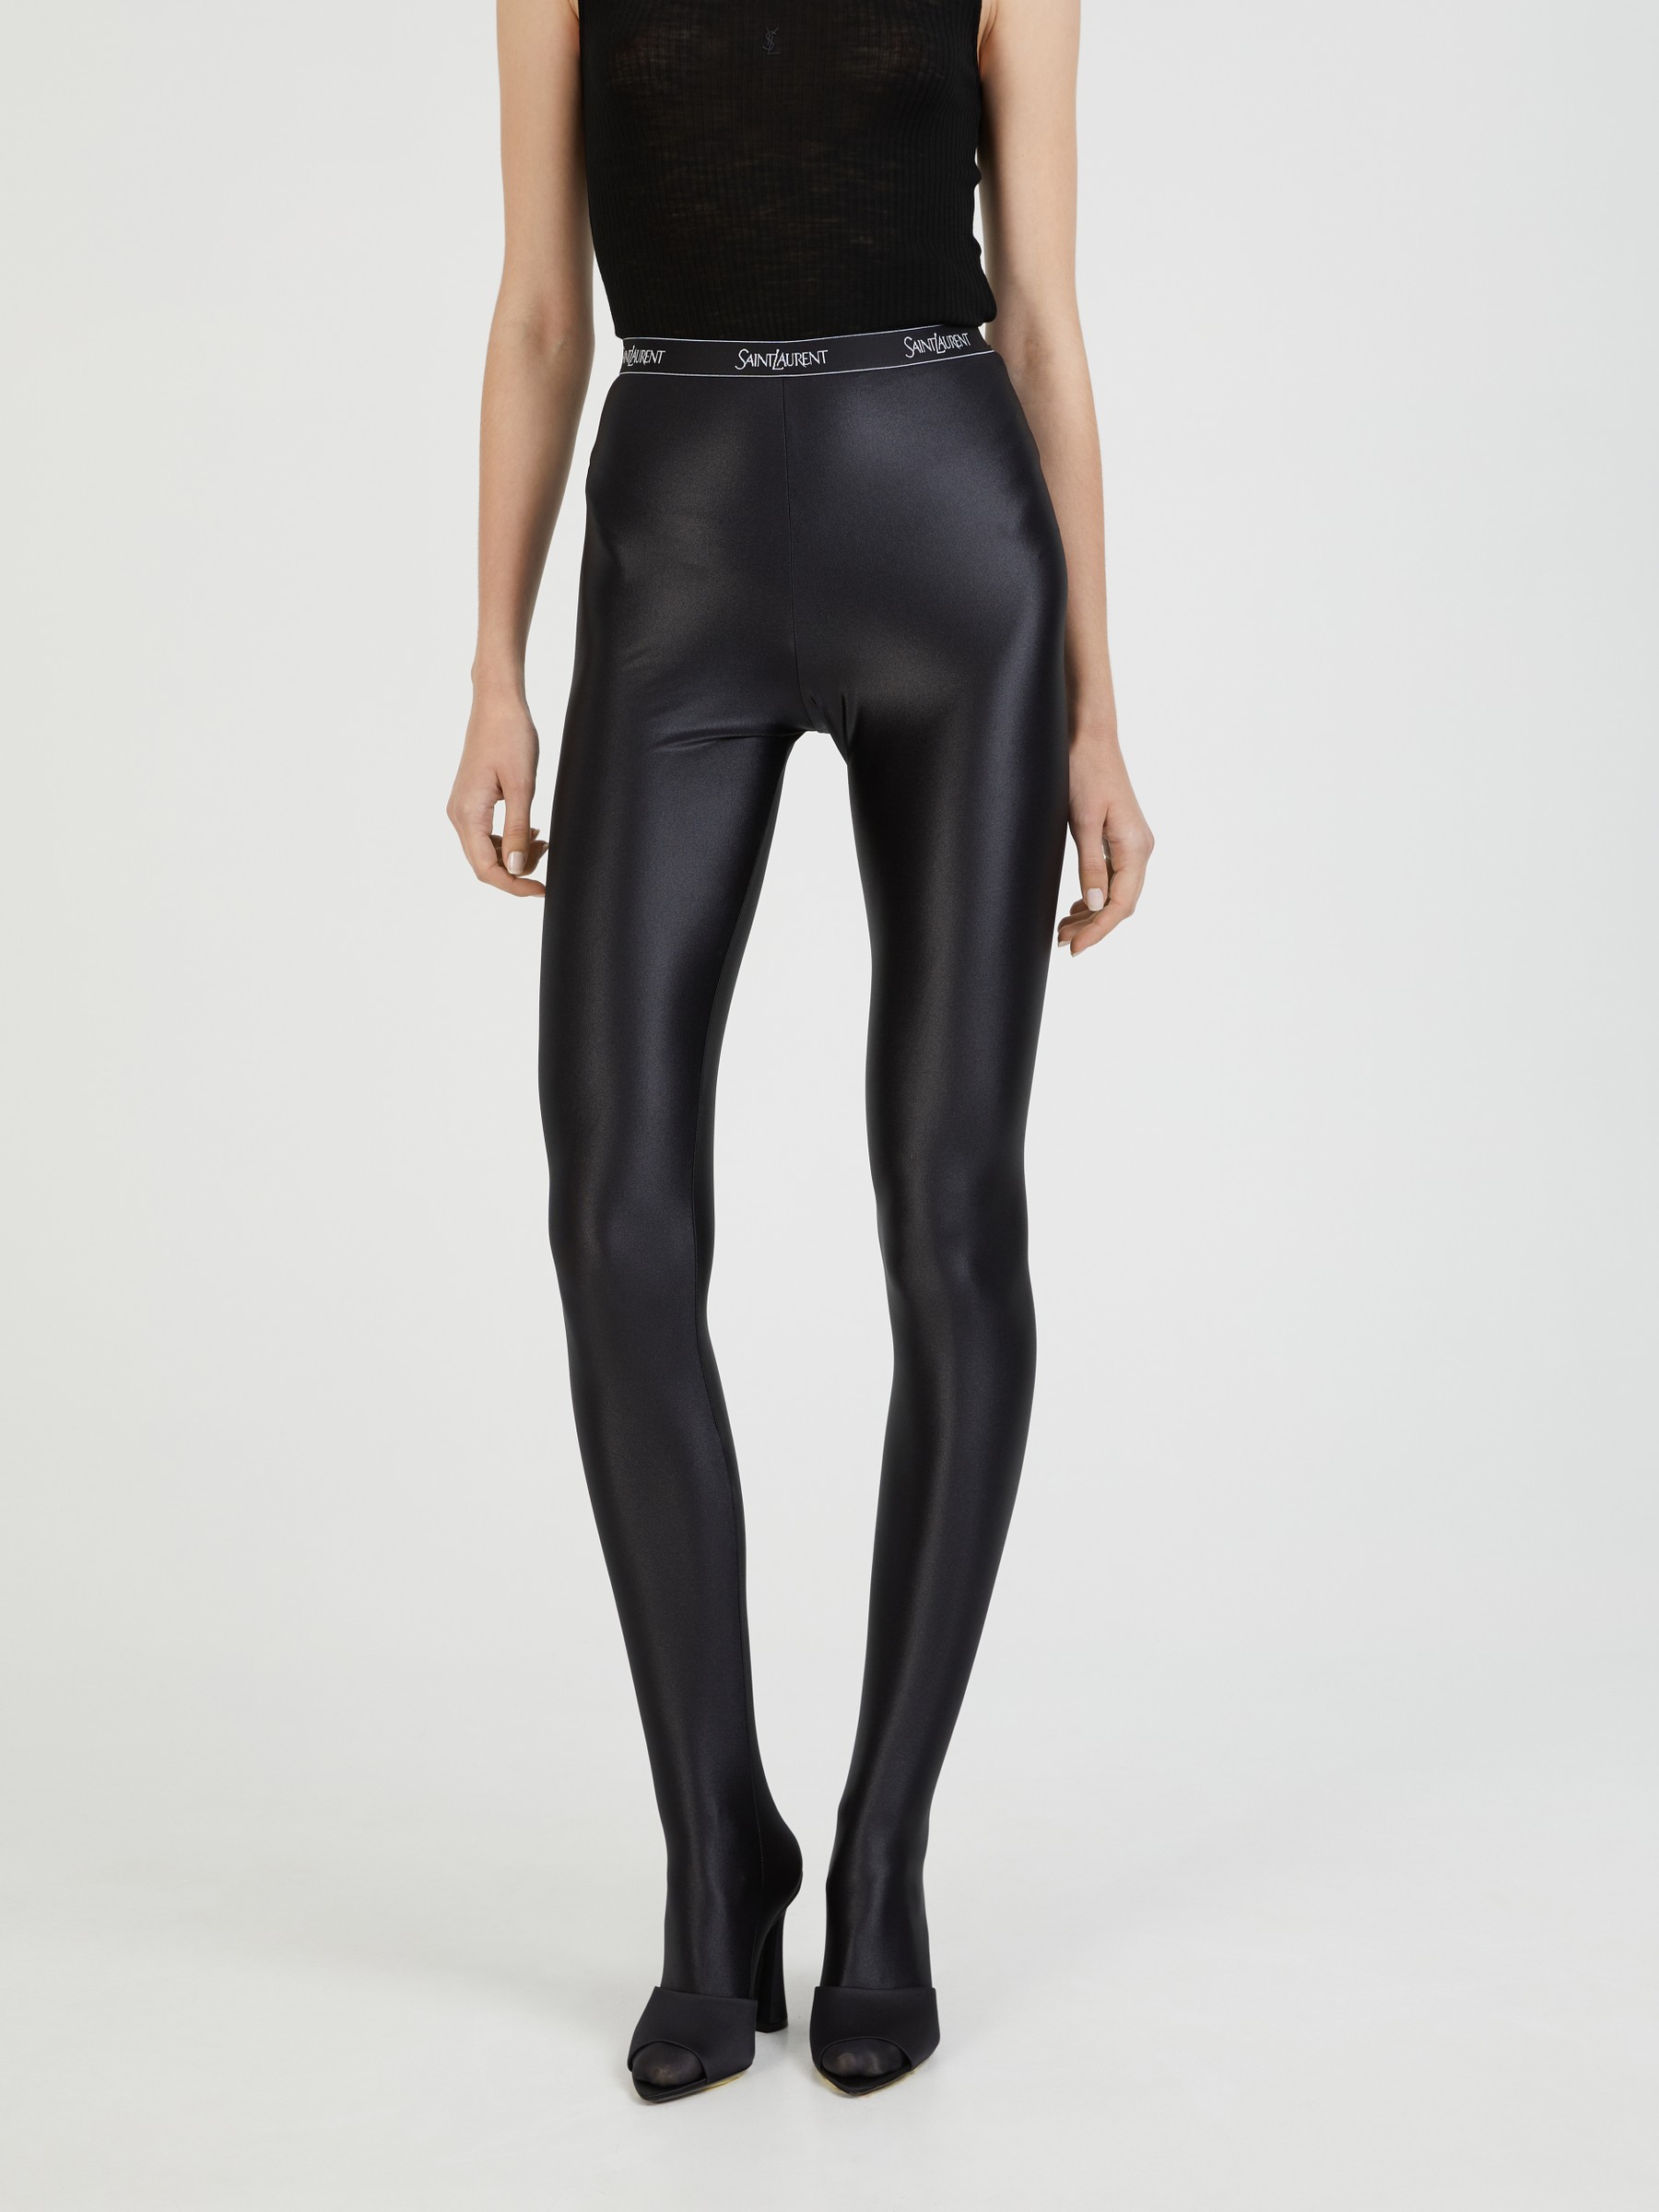 Latex leggings in black - Saint Laurent